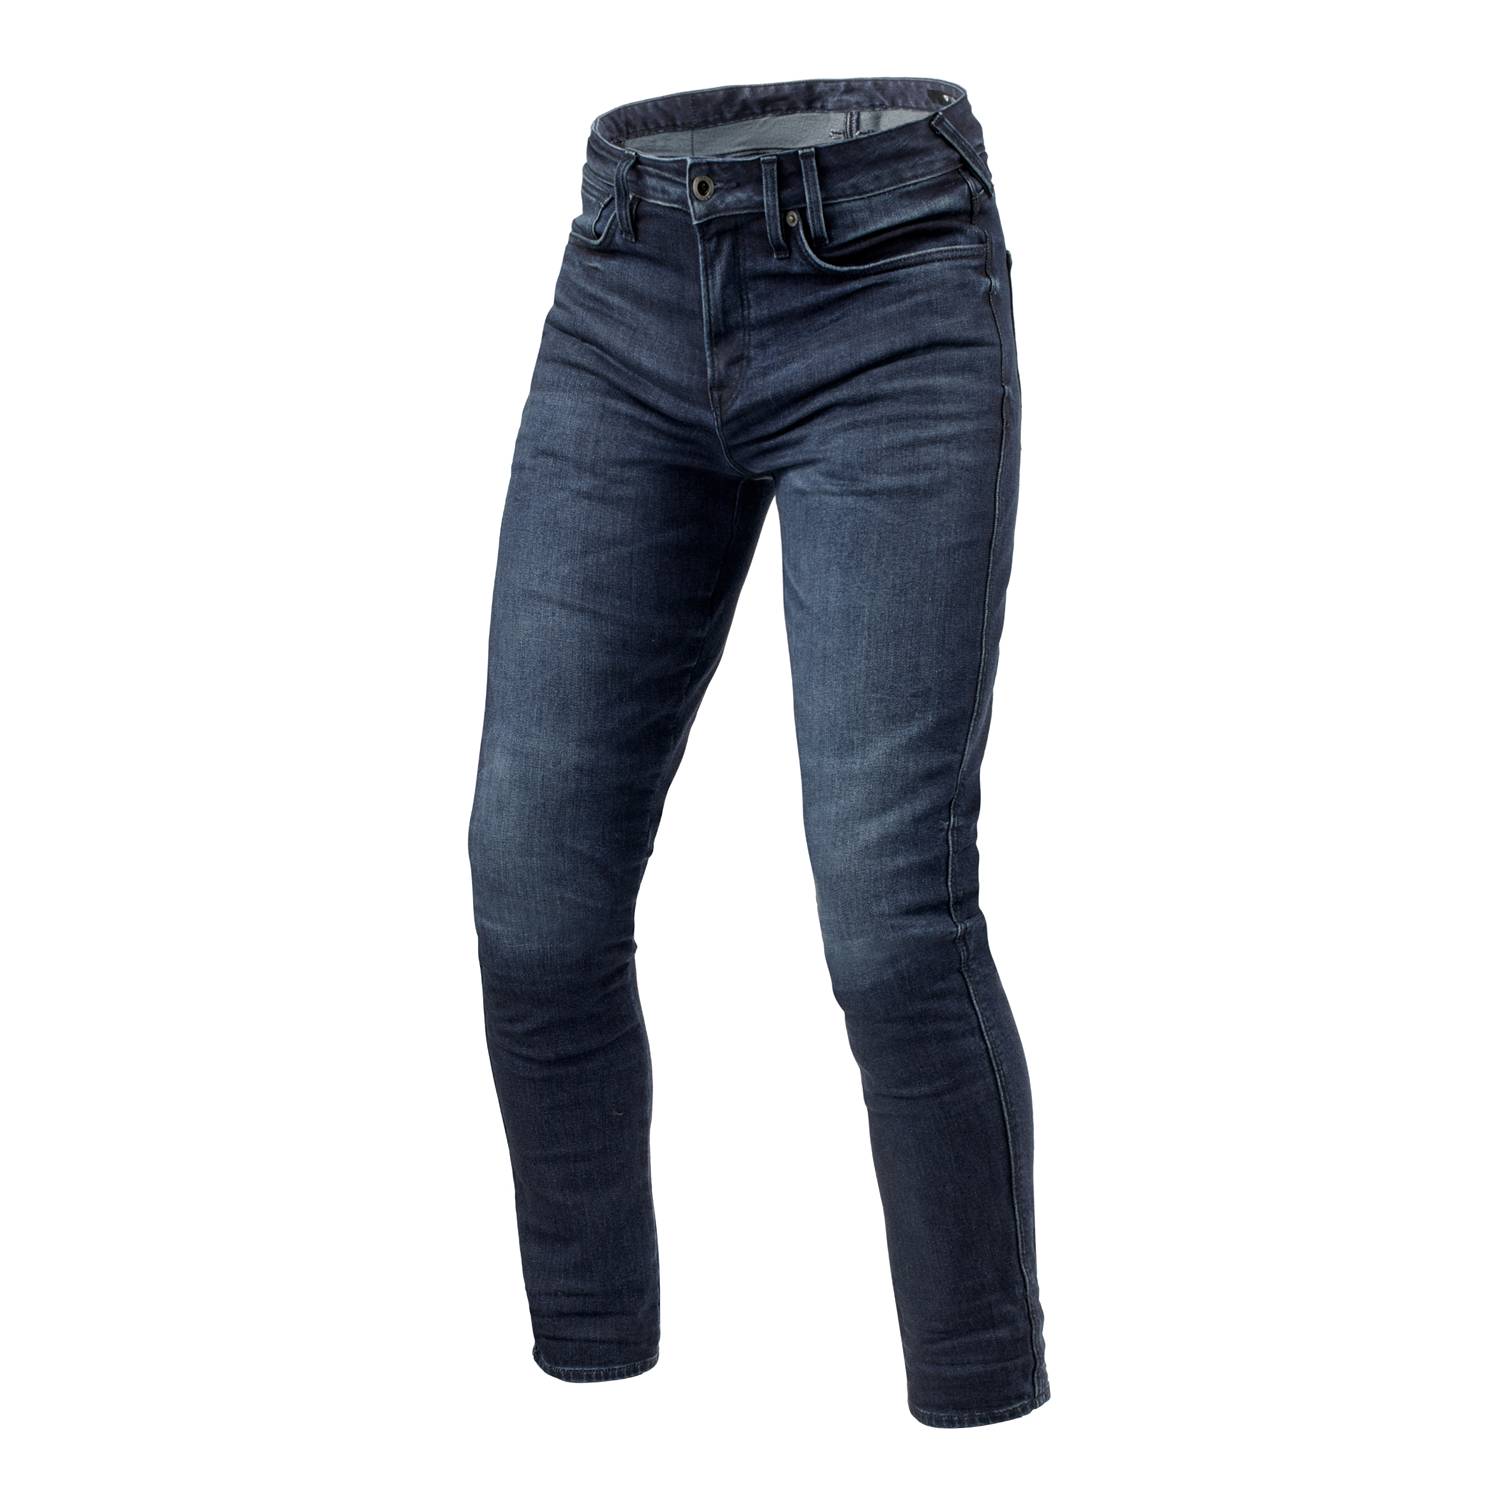 Image of REV'IT! Jeans Carlin SK Dark Blue Used L36 Motorcycle Jeans Talla L36/W32